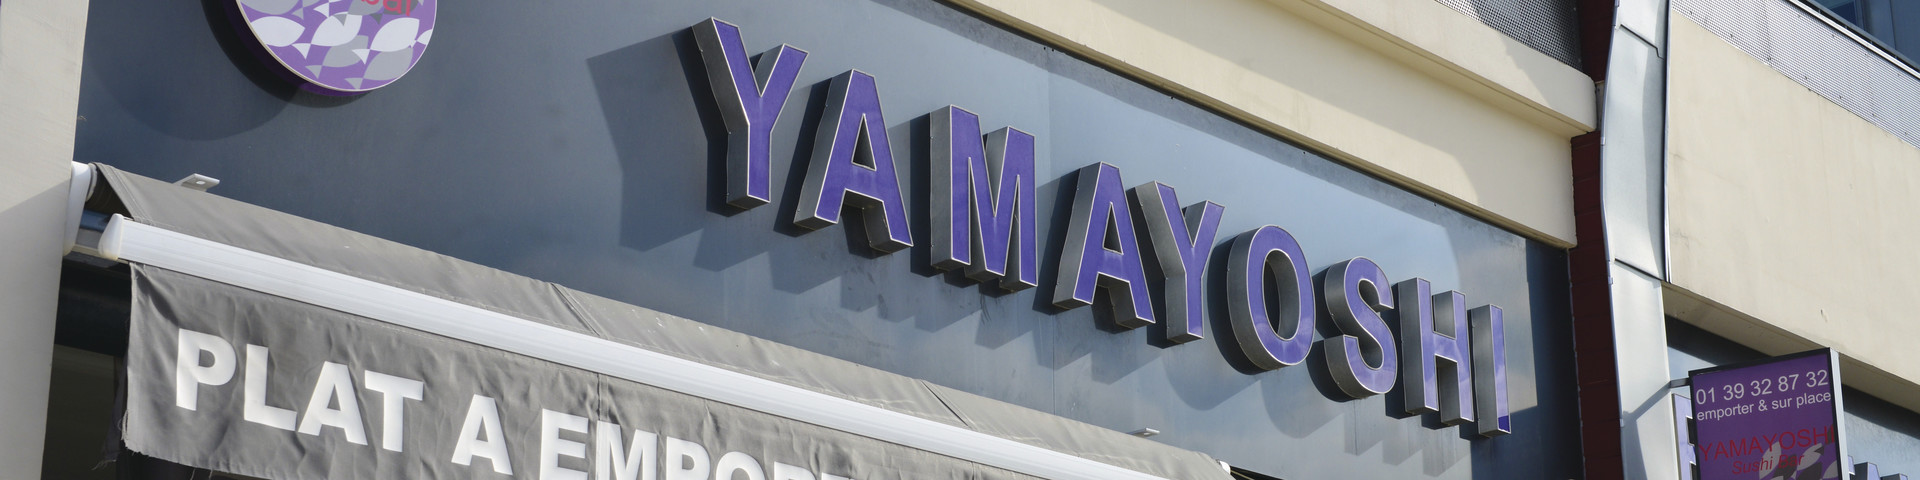 Boutique YAMAYOSHI - Mon commerce à Herblay